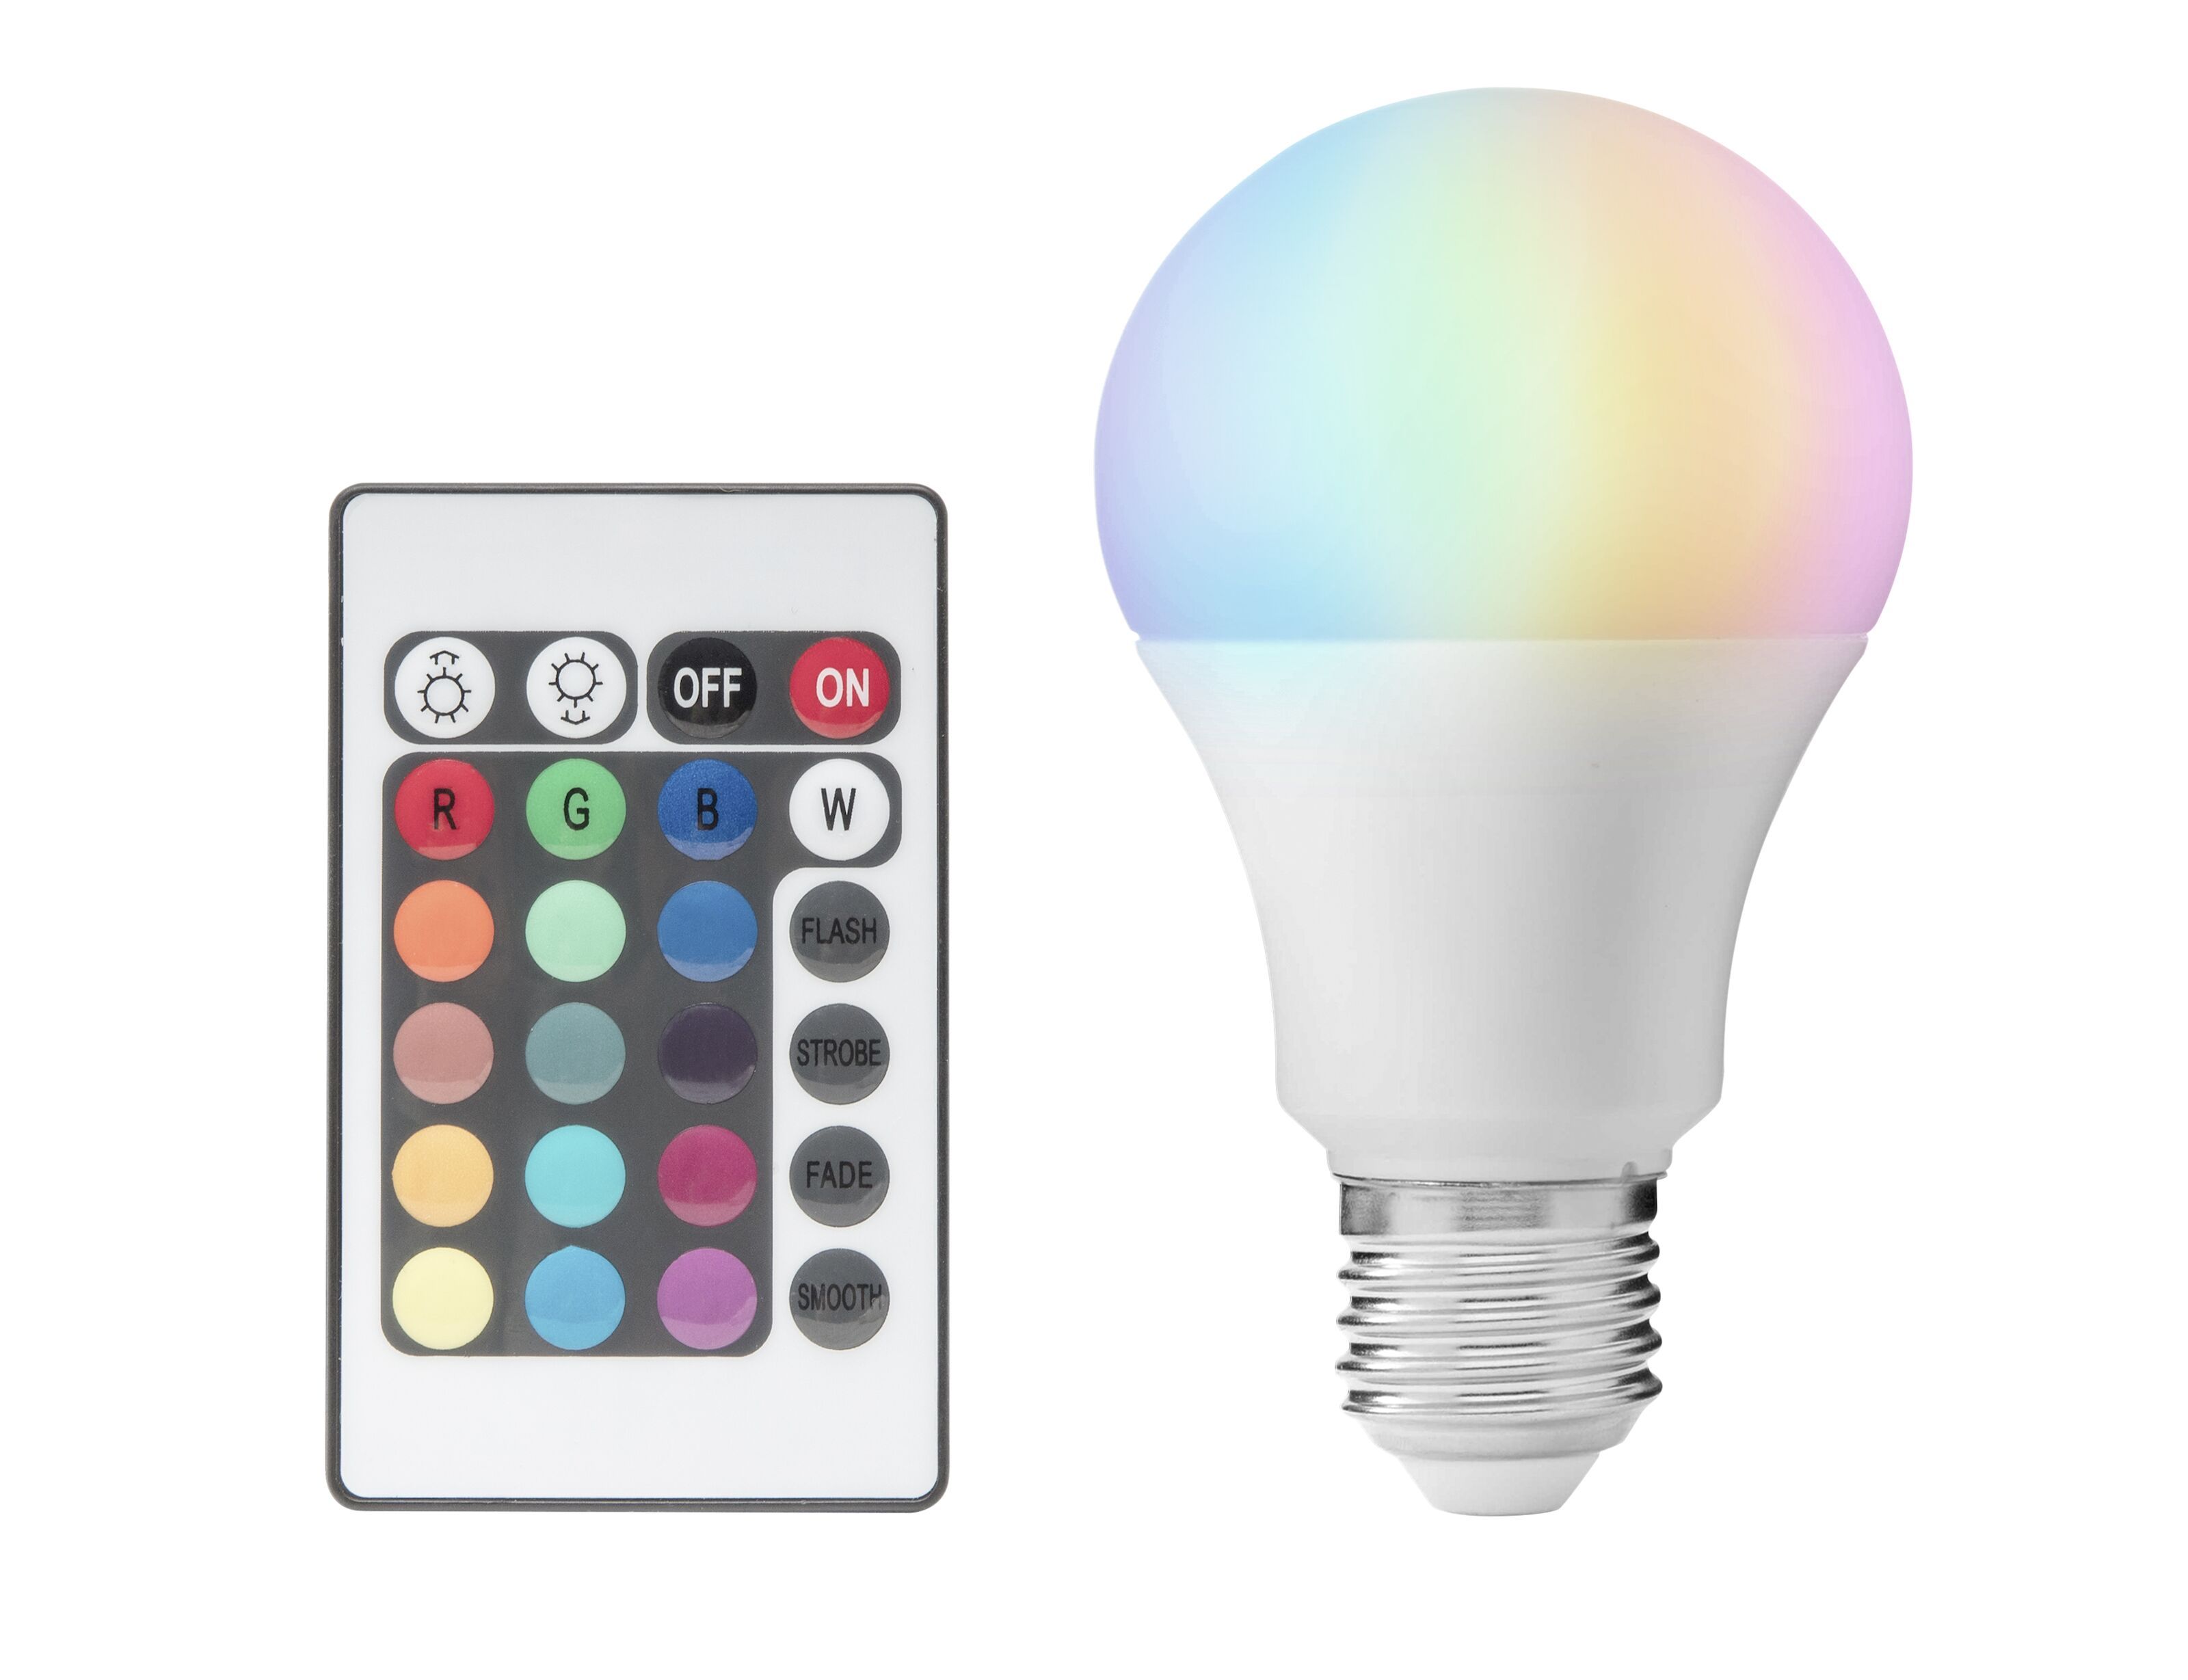 Andet specifikation Mod Ledsavers RGB-pære med fjernkontroll E27 350 lm - E27-lamper | Kjell.com